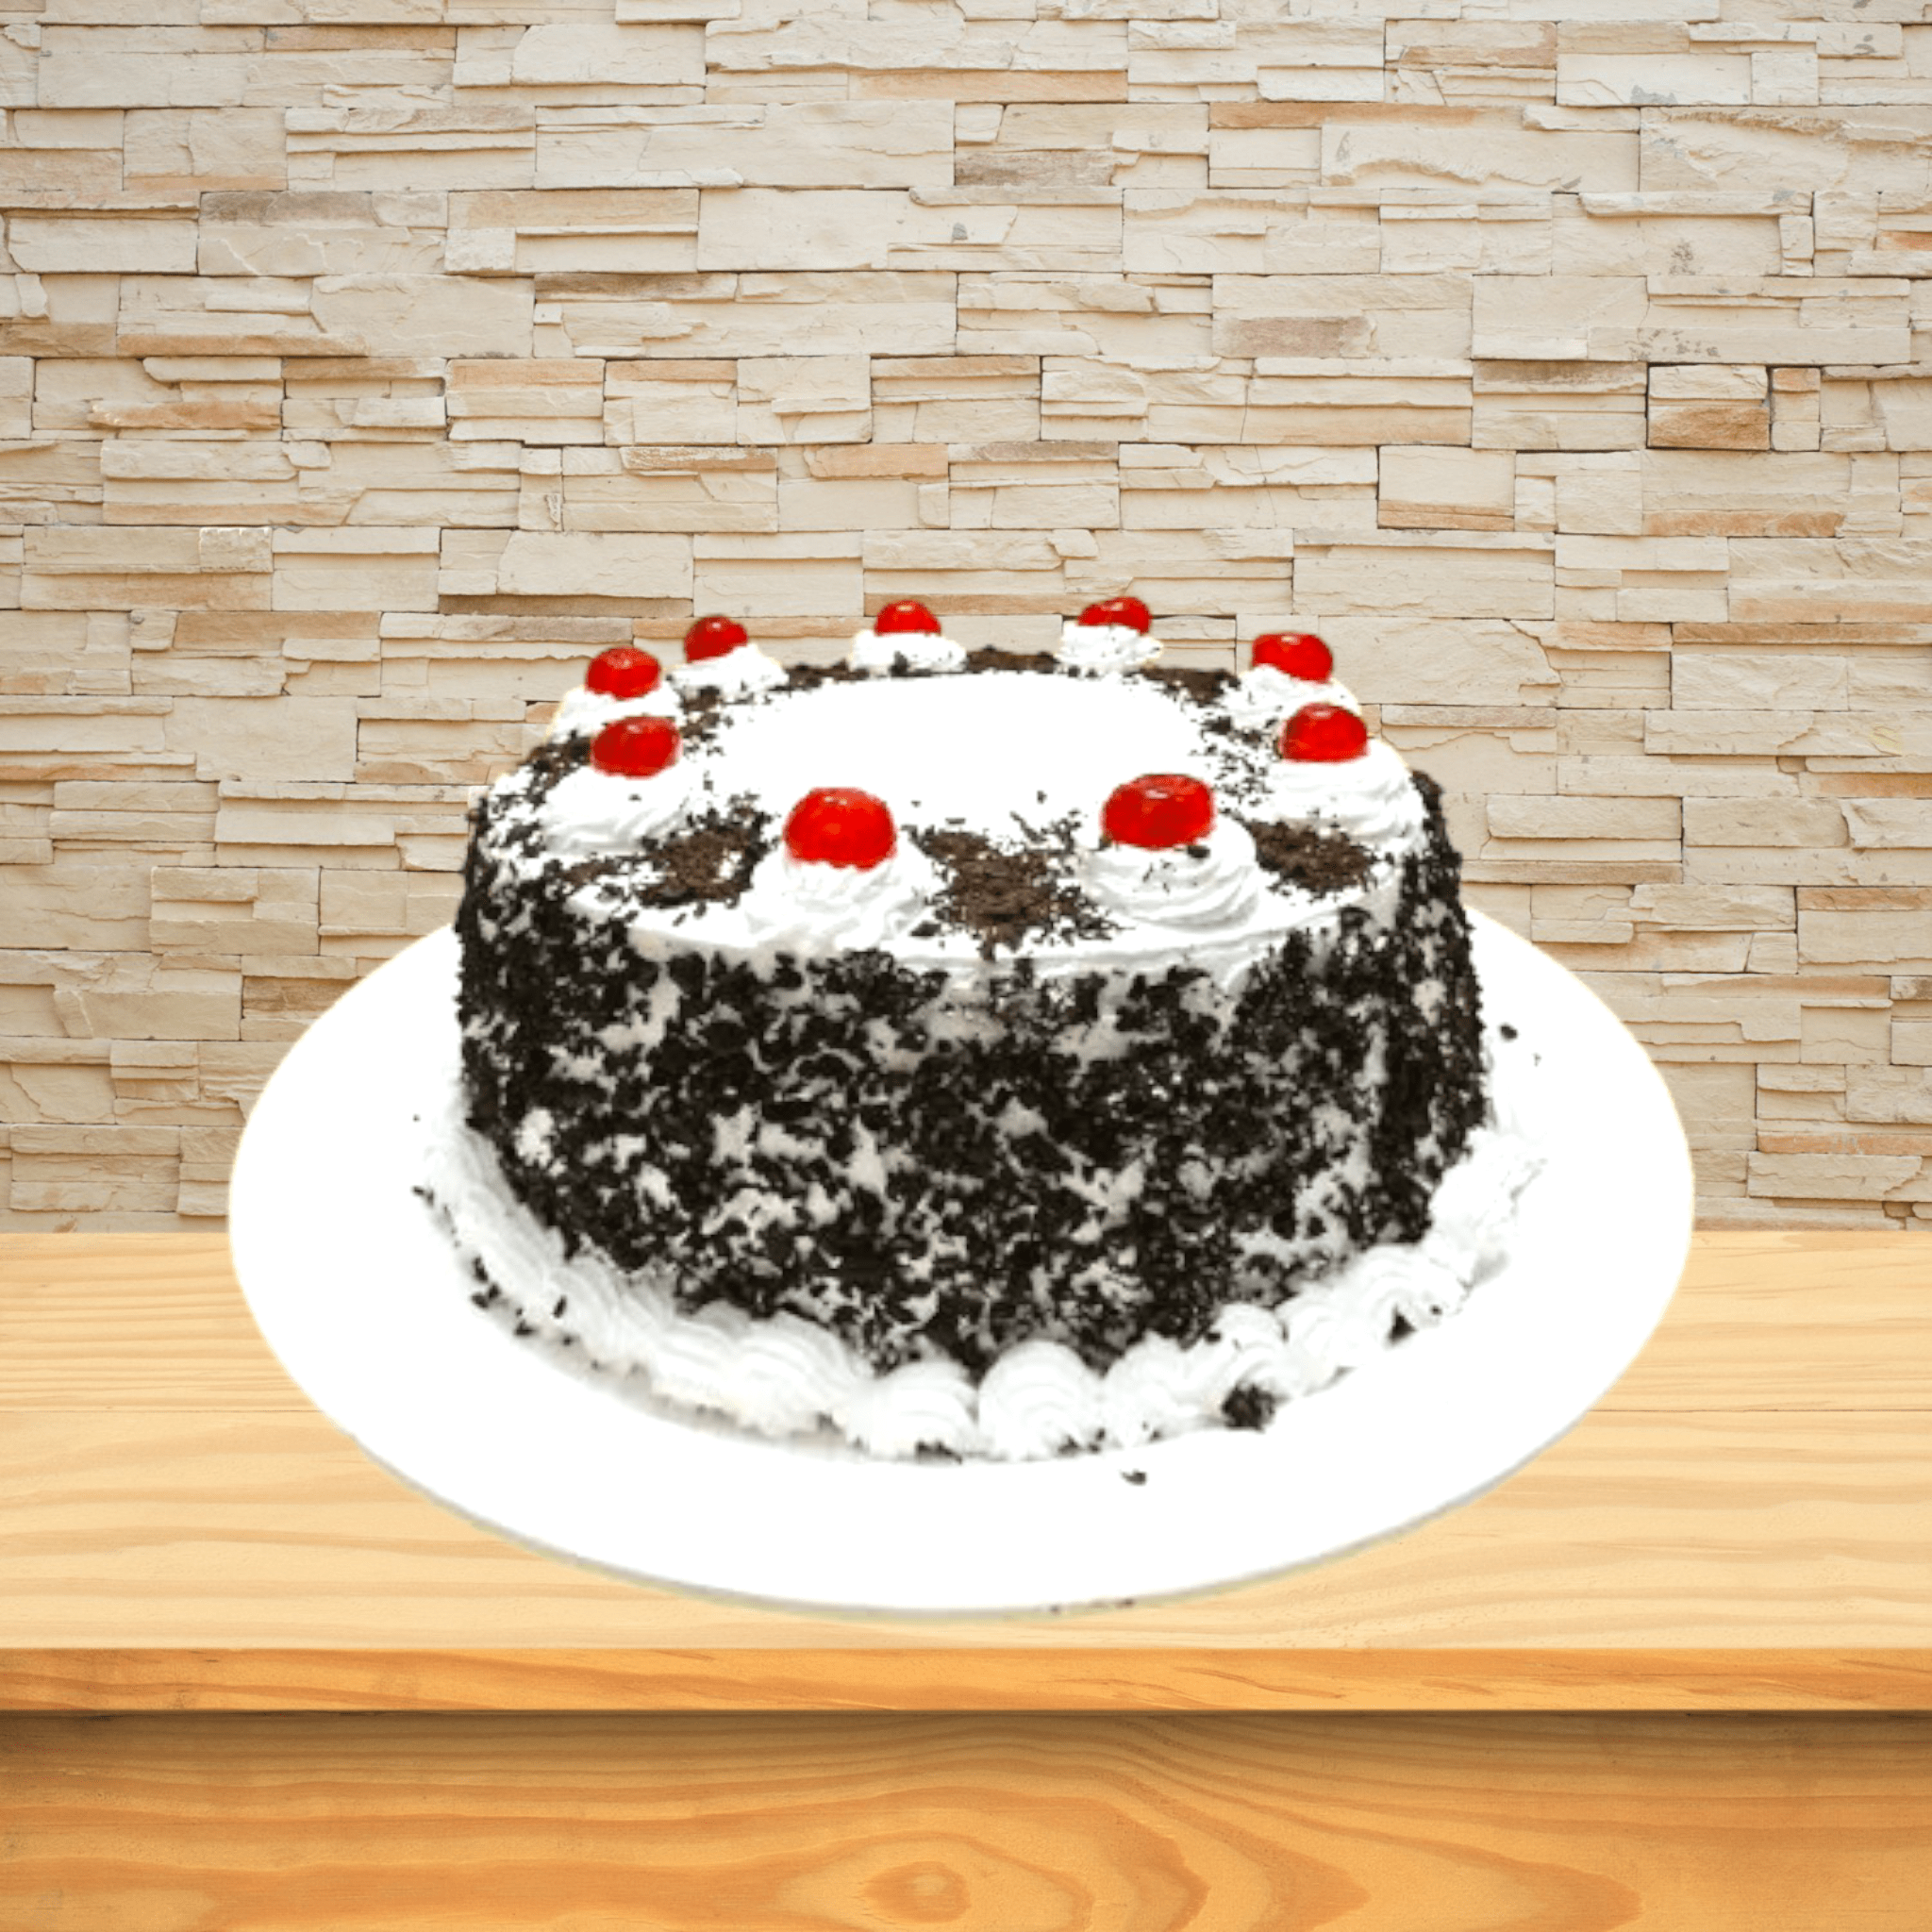 Top Birthday Cake Manufacturers in Gyanpur, Bhadohi - बर्थडे केक  मनुफक्चरर्स, ज्ञानपुर , भदोही - Justdial